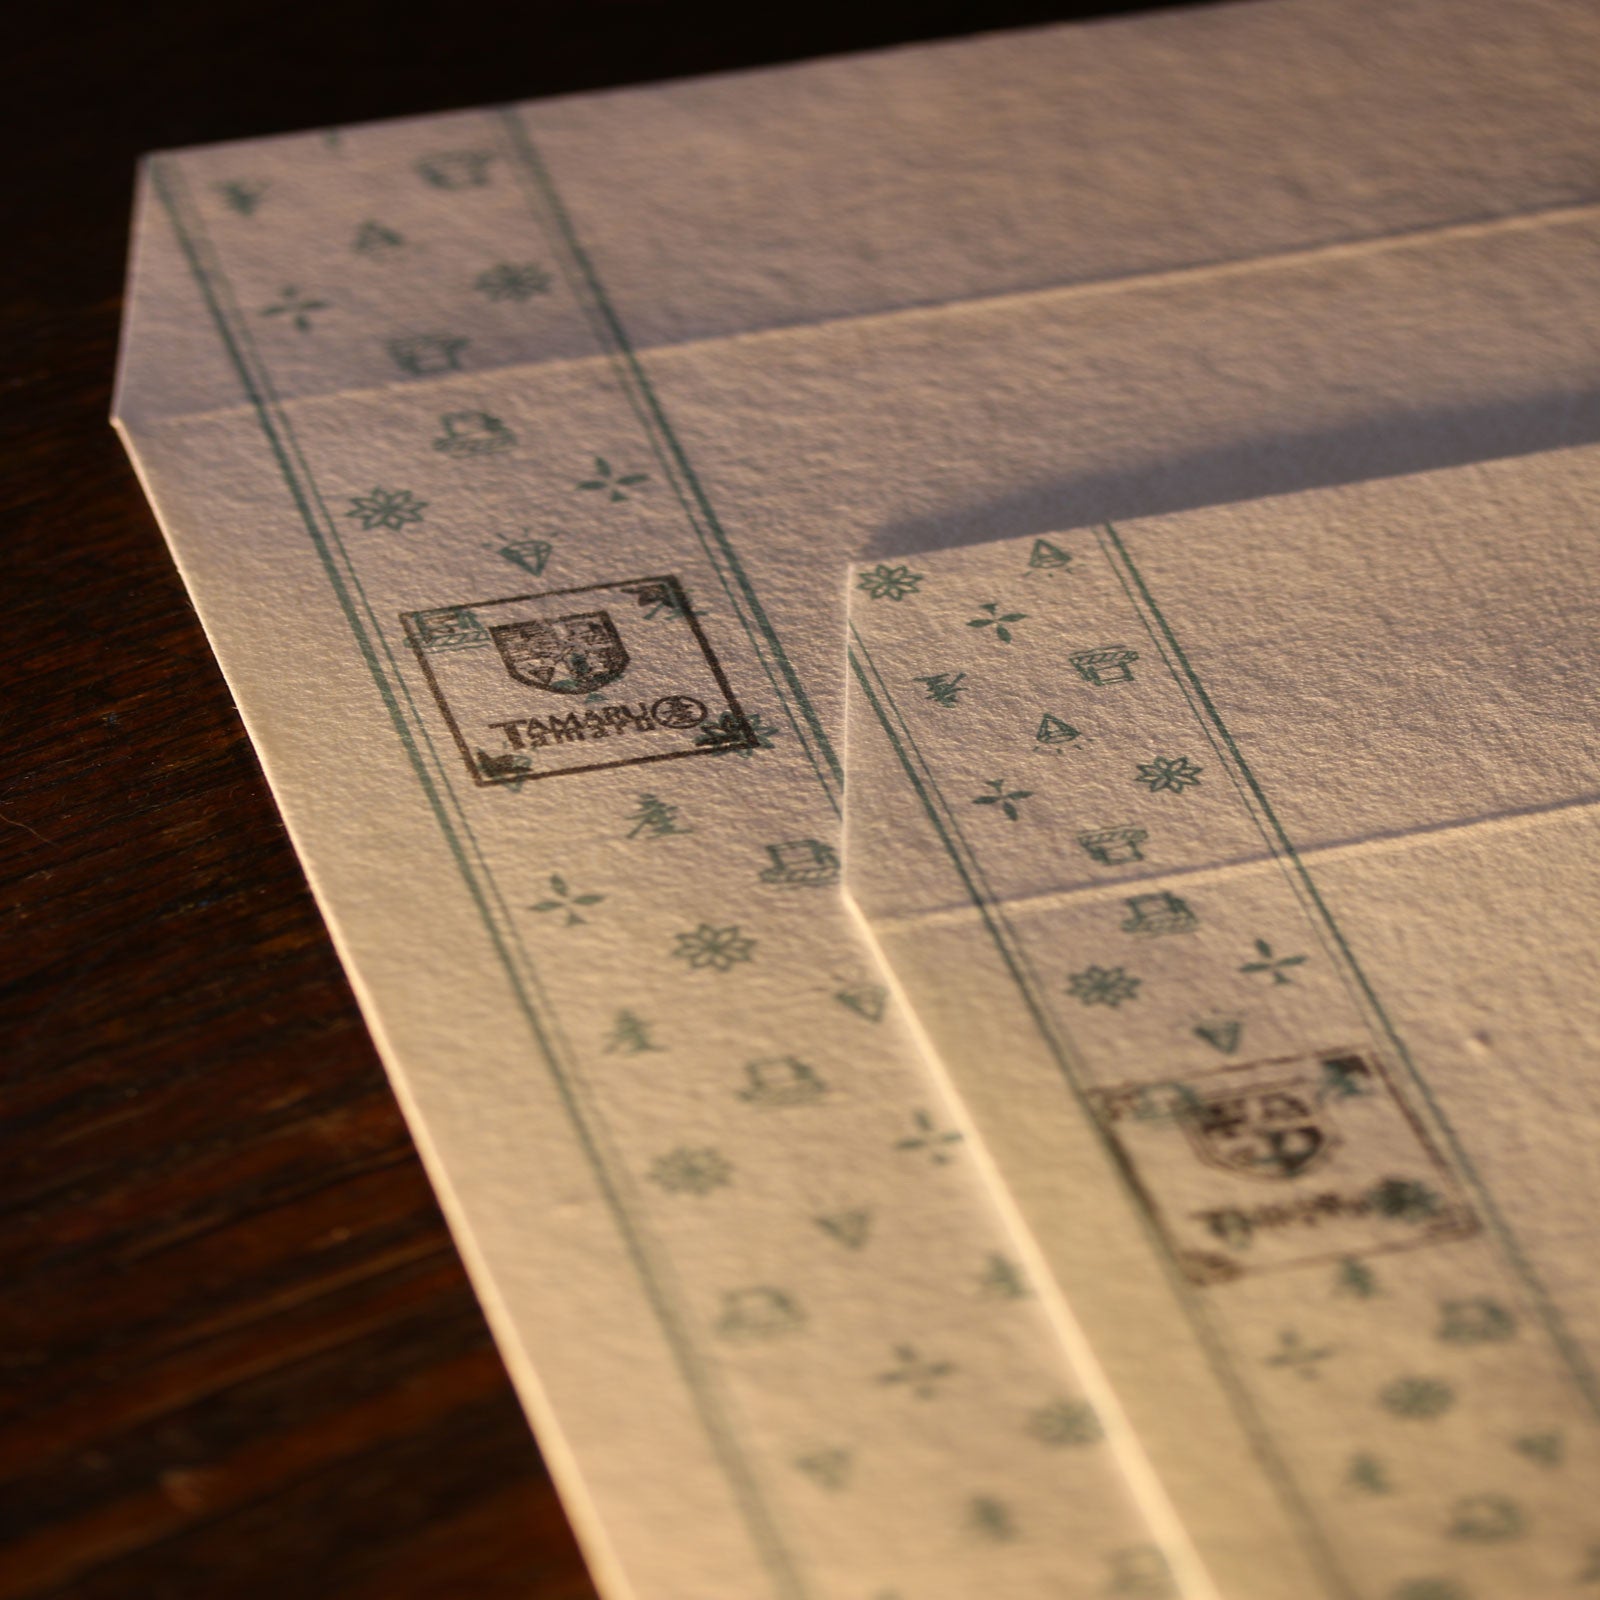 Mouse Handkerchief Hand Print White TAMARUSAN